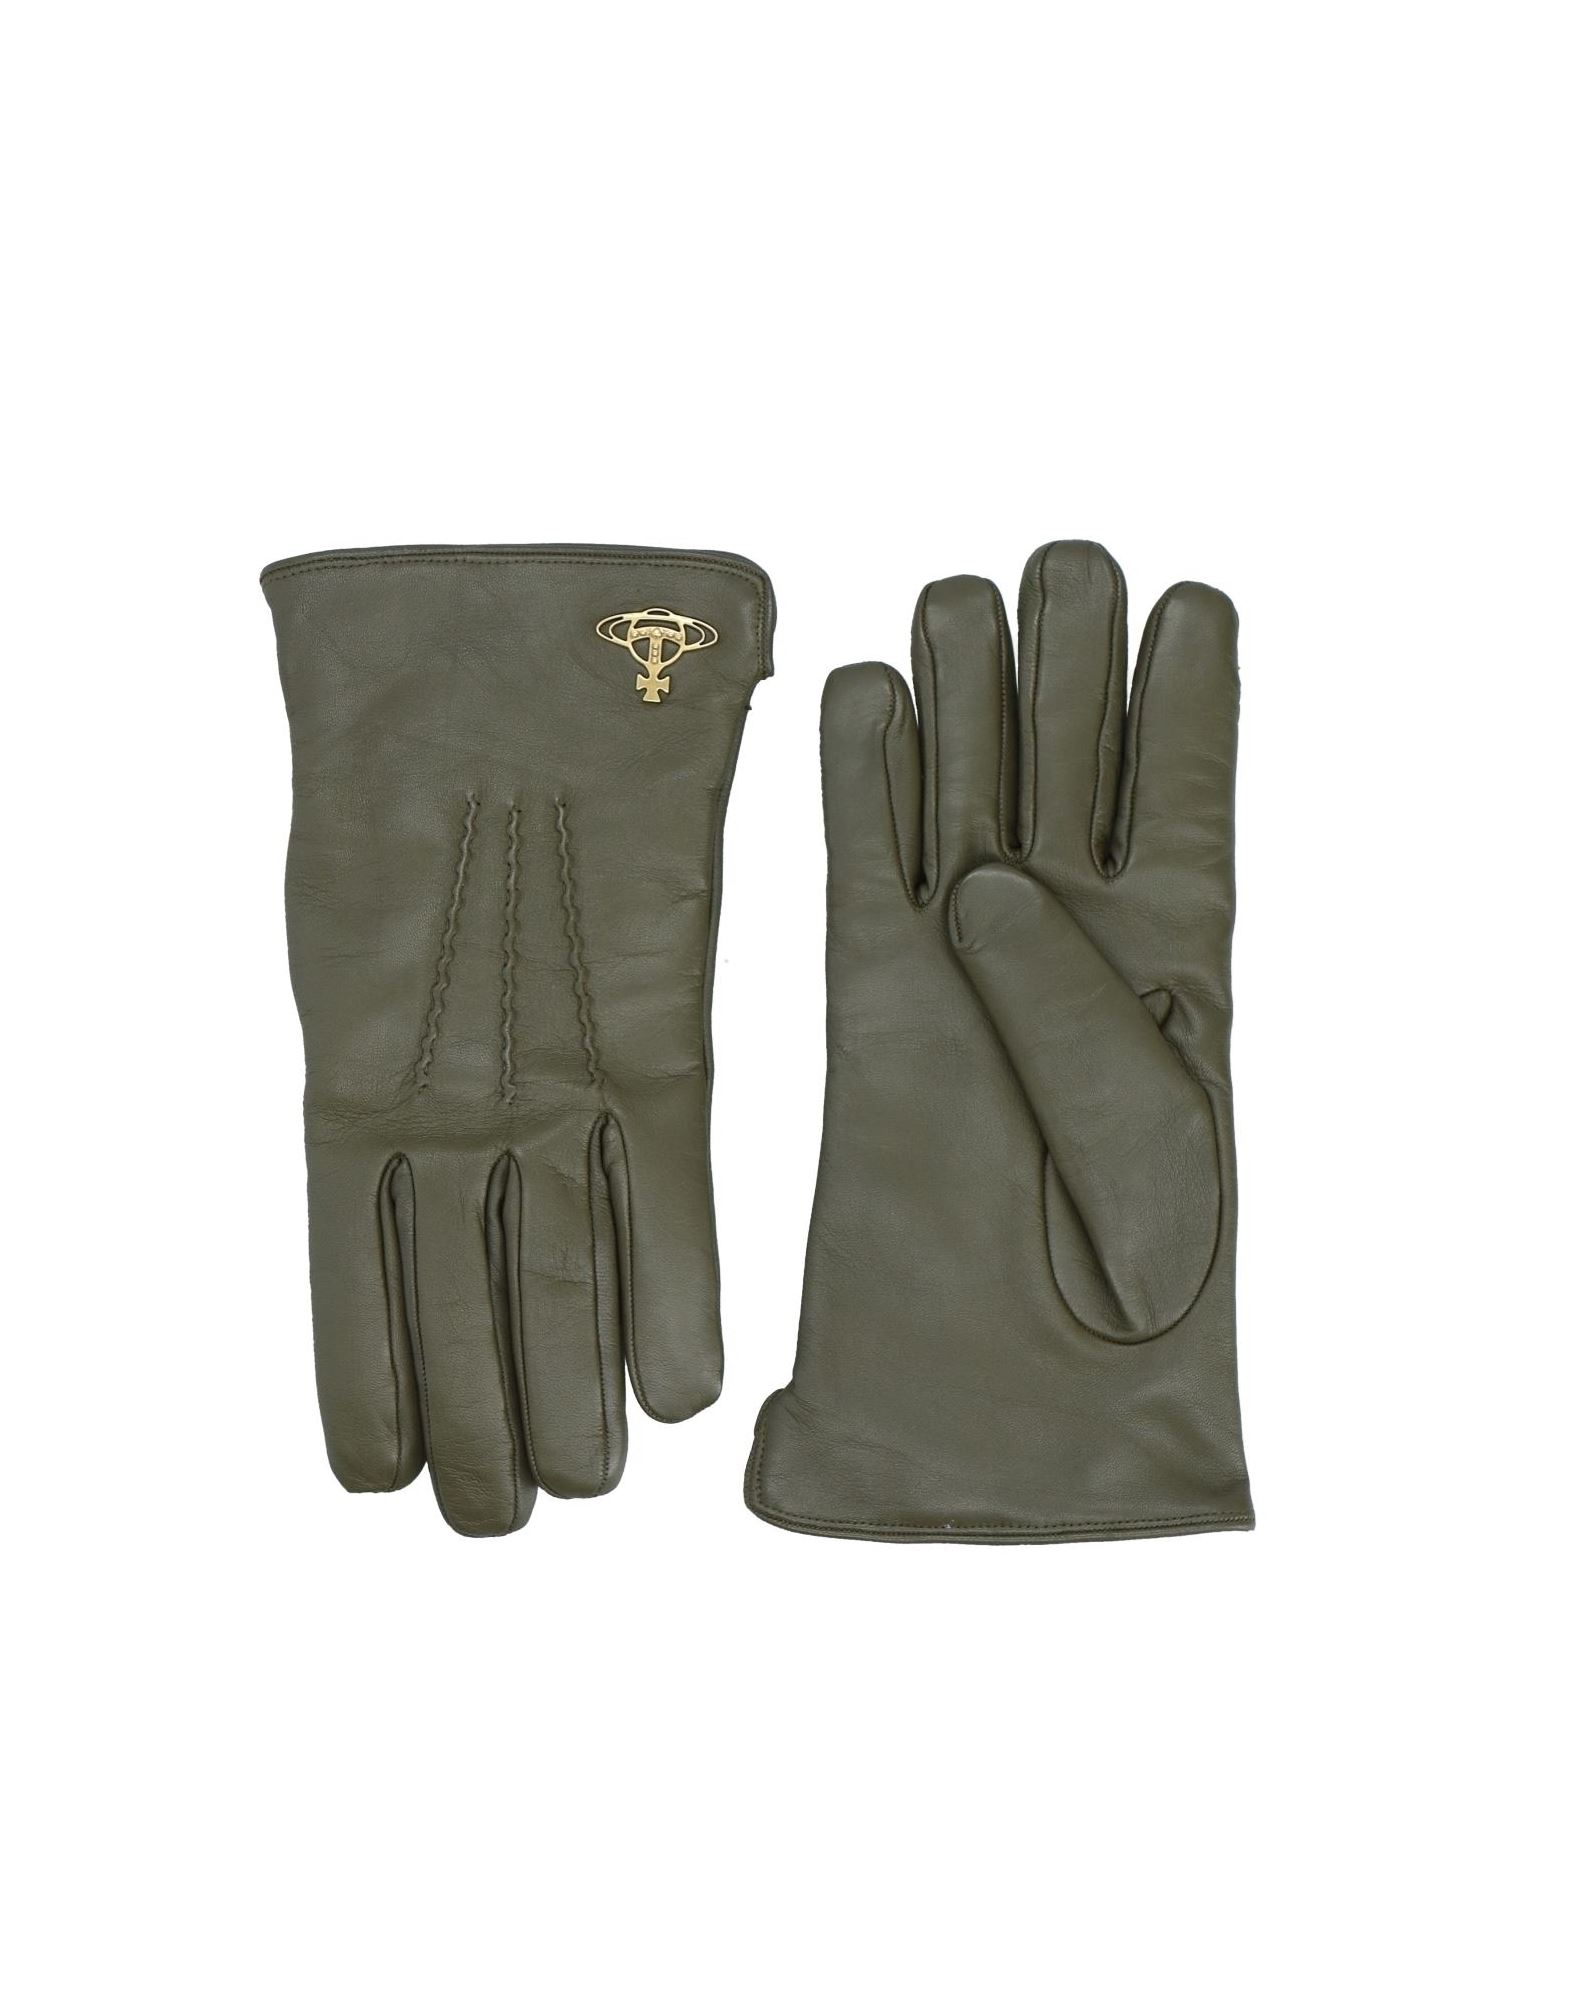 Vivienne Westwood Gloves In Military Green